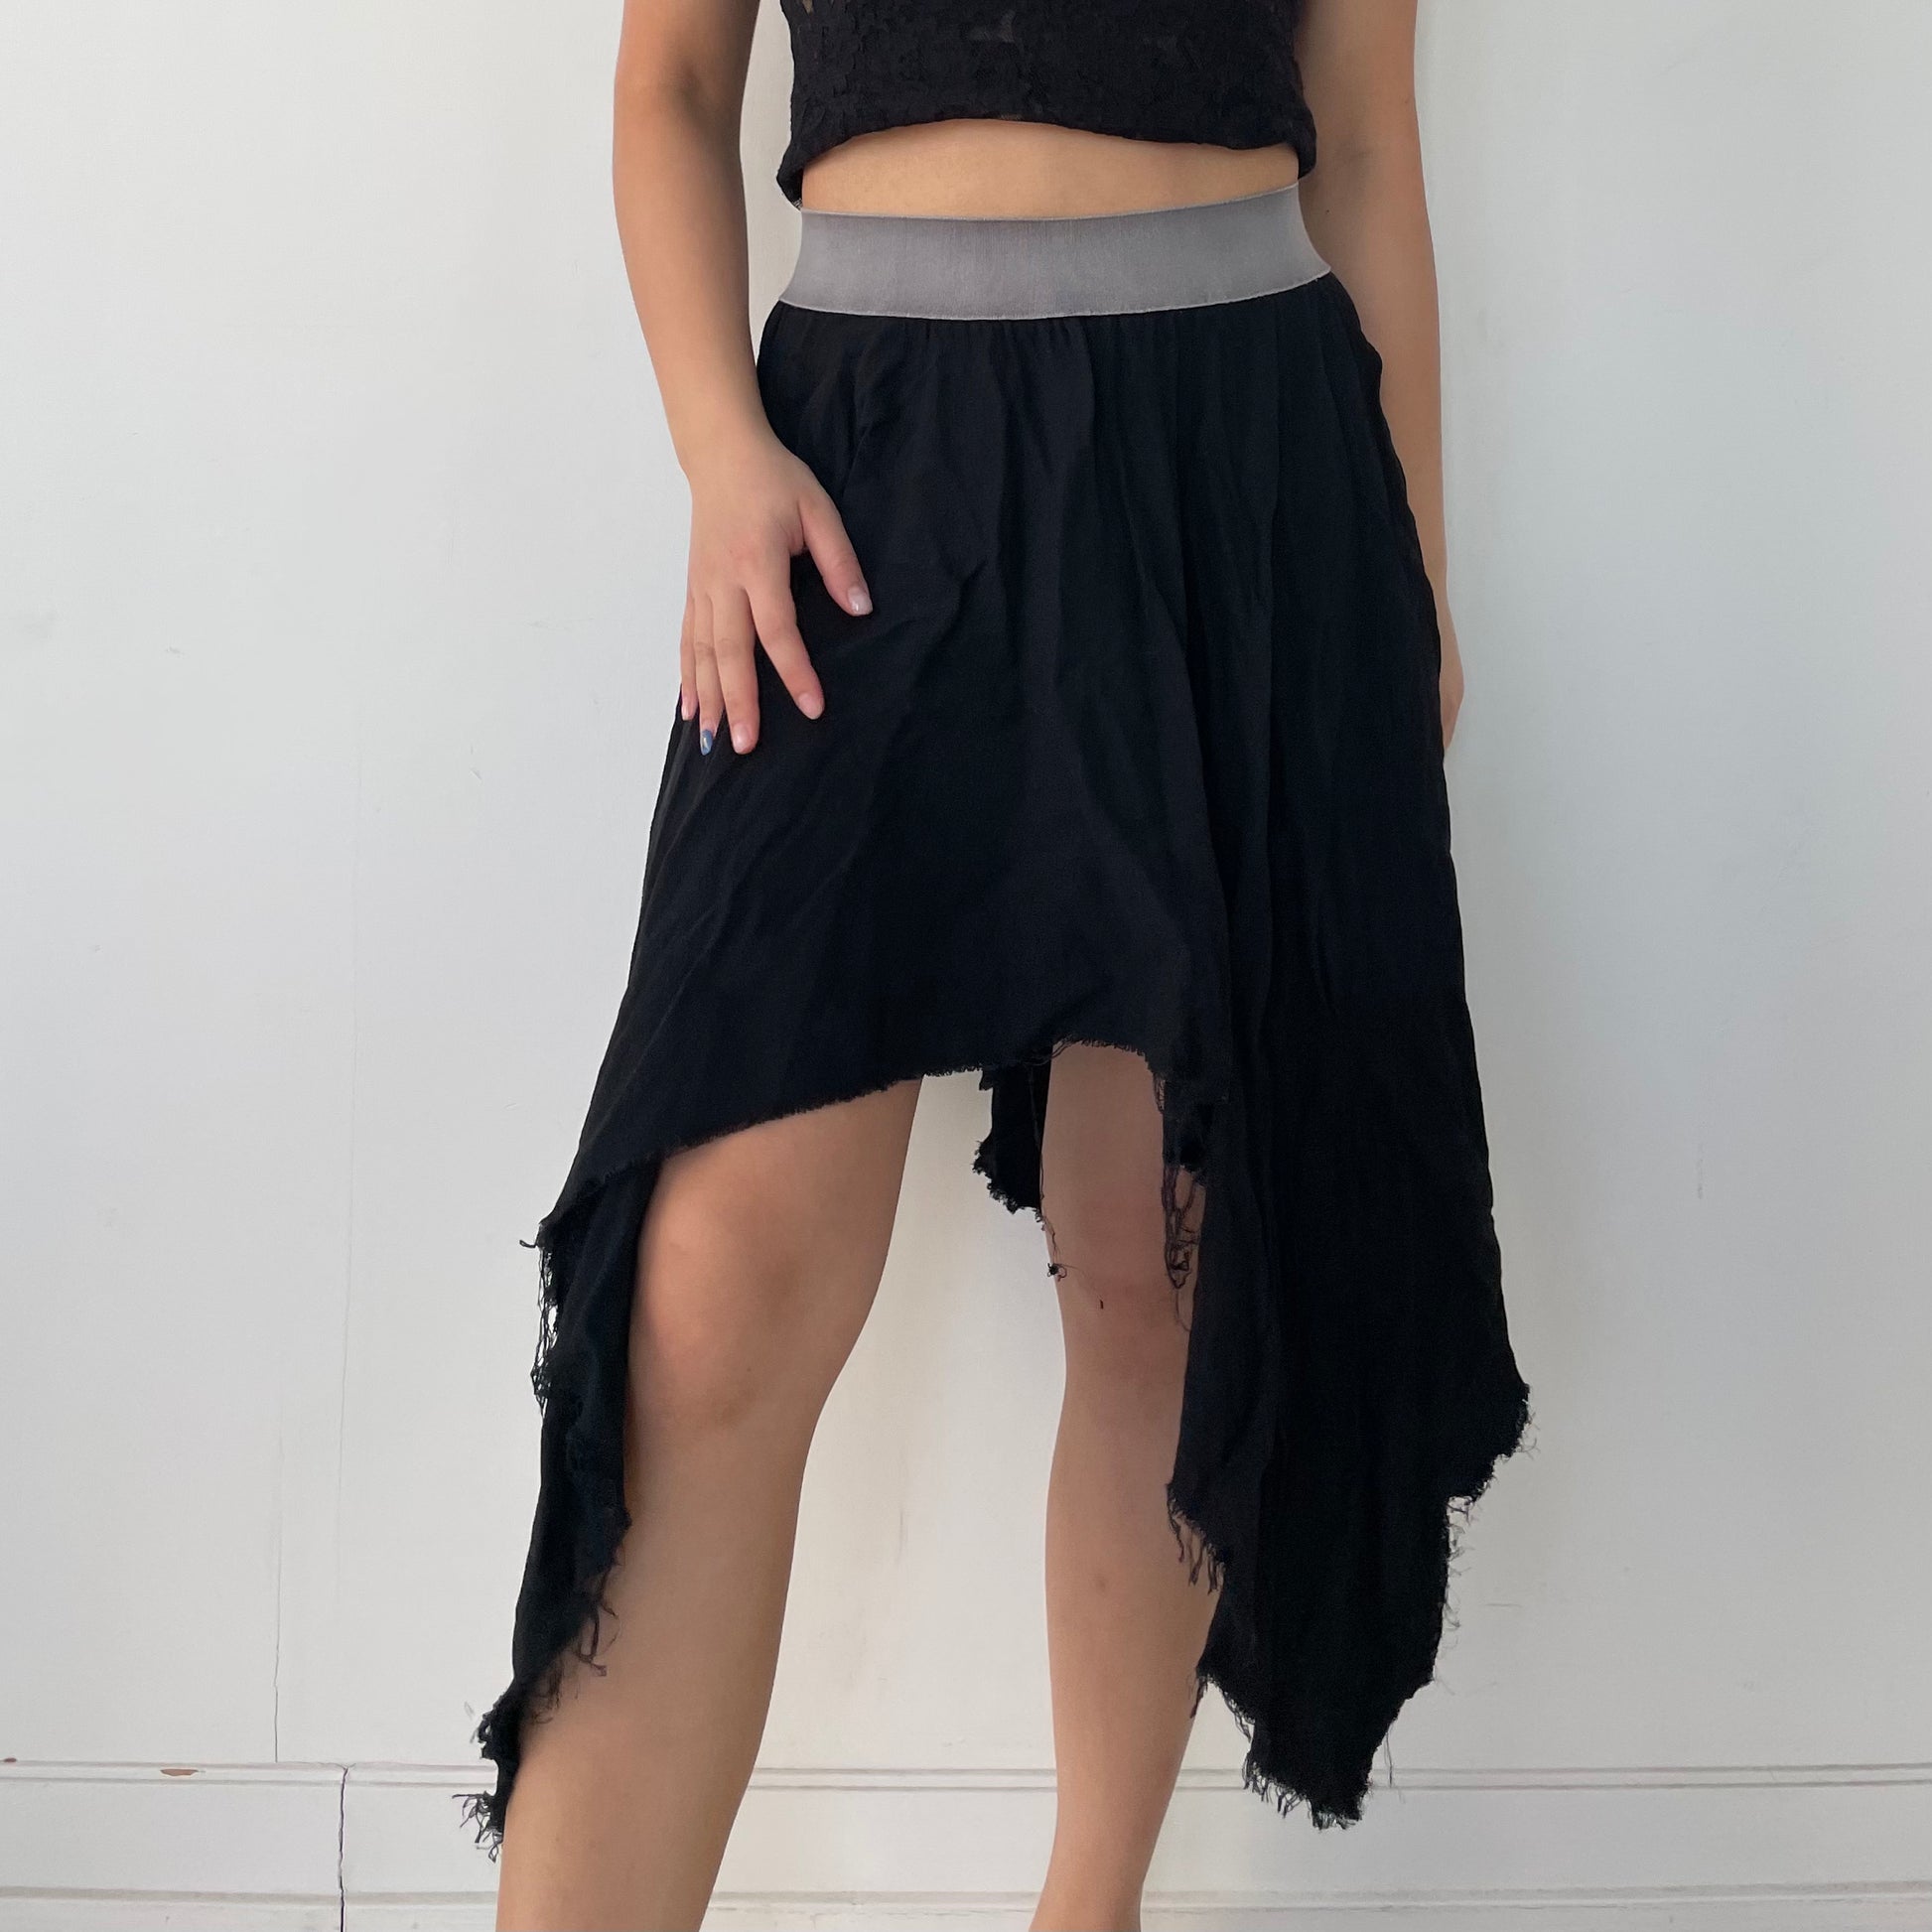 m.a+ Maurizio Amadei Black Asymmetrical Raw Hem Skirt - Small